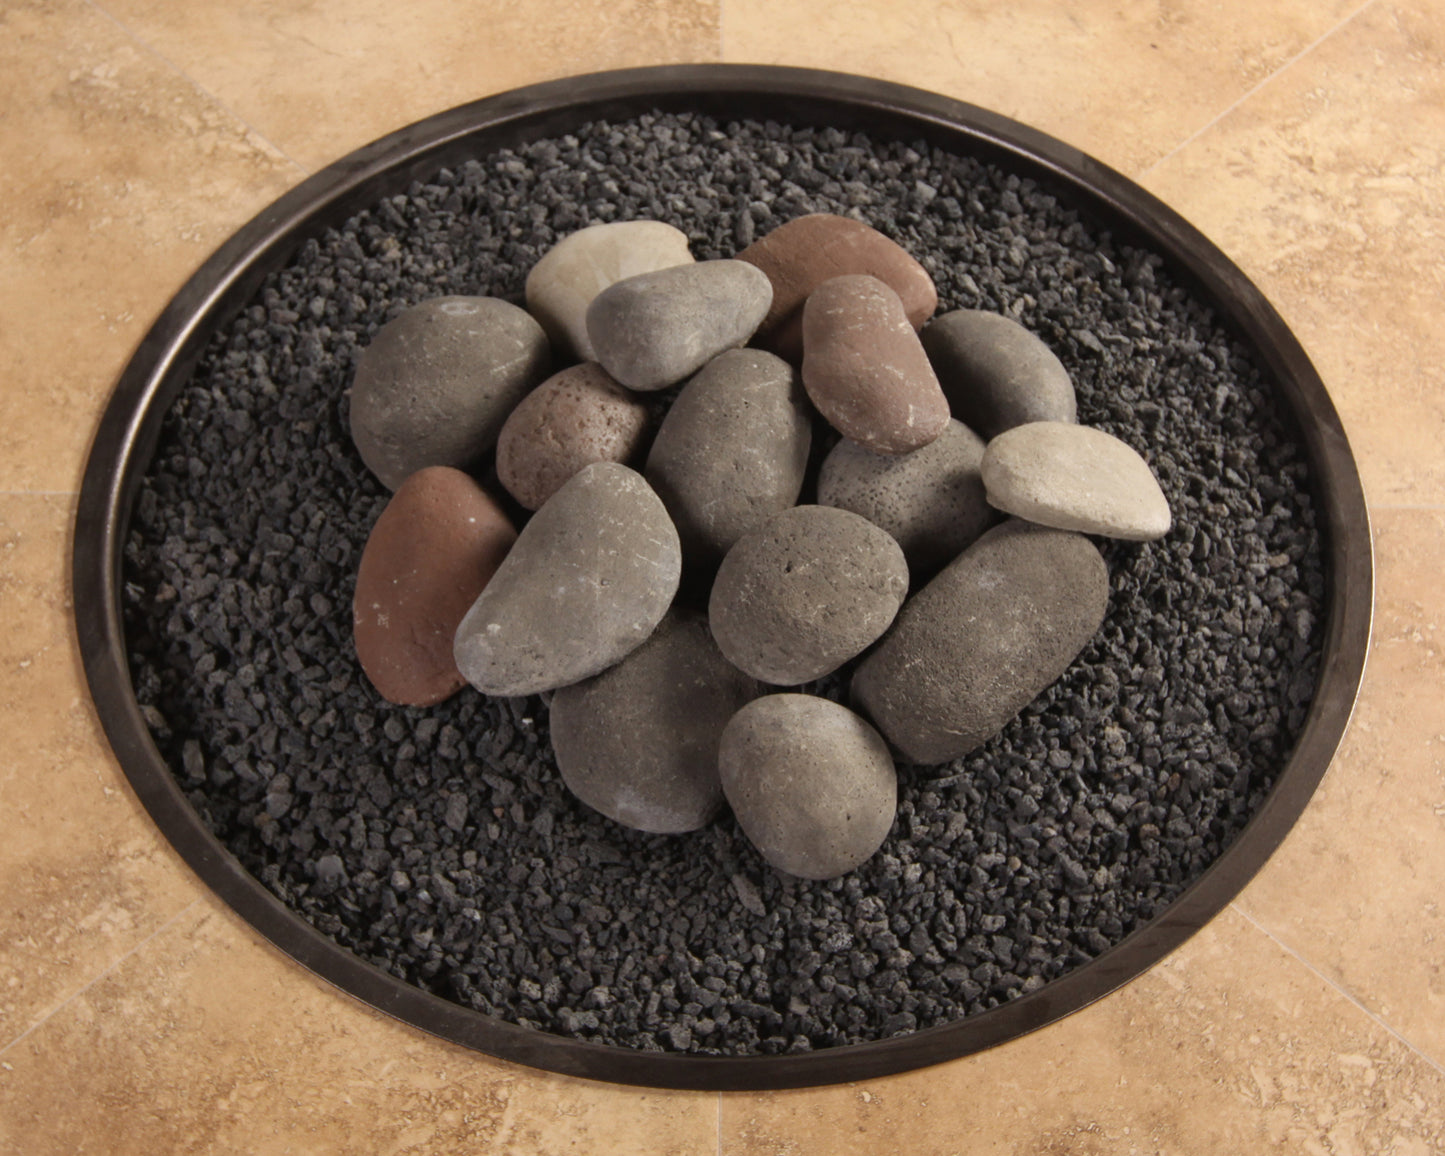 Hi-Heat Ceramic Rock w/ Lava Granules Fire Media Kit is available at Jacobs Custom Living Spokane Valley showroom.